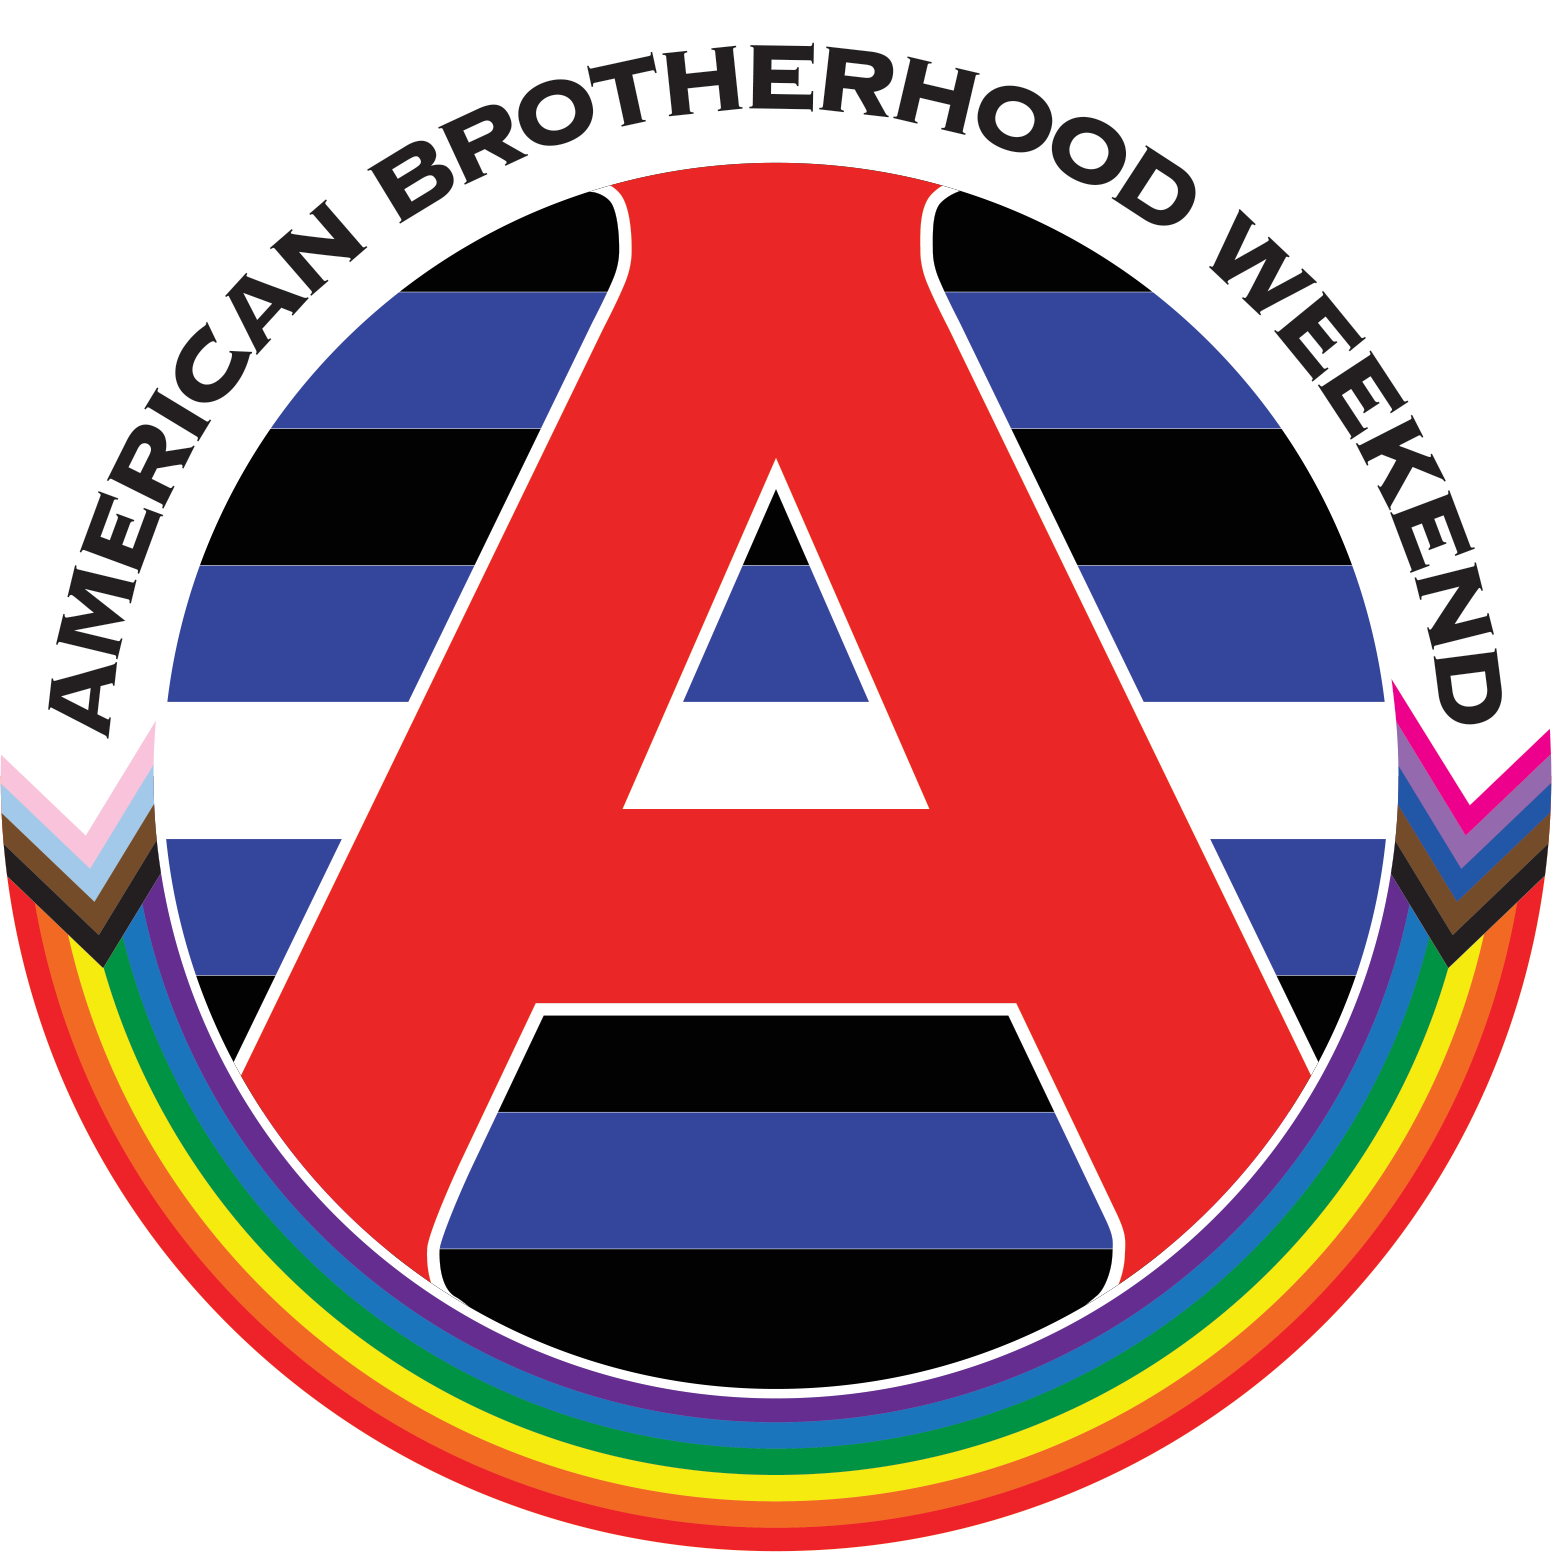 abw logo final